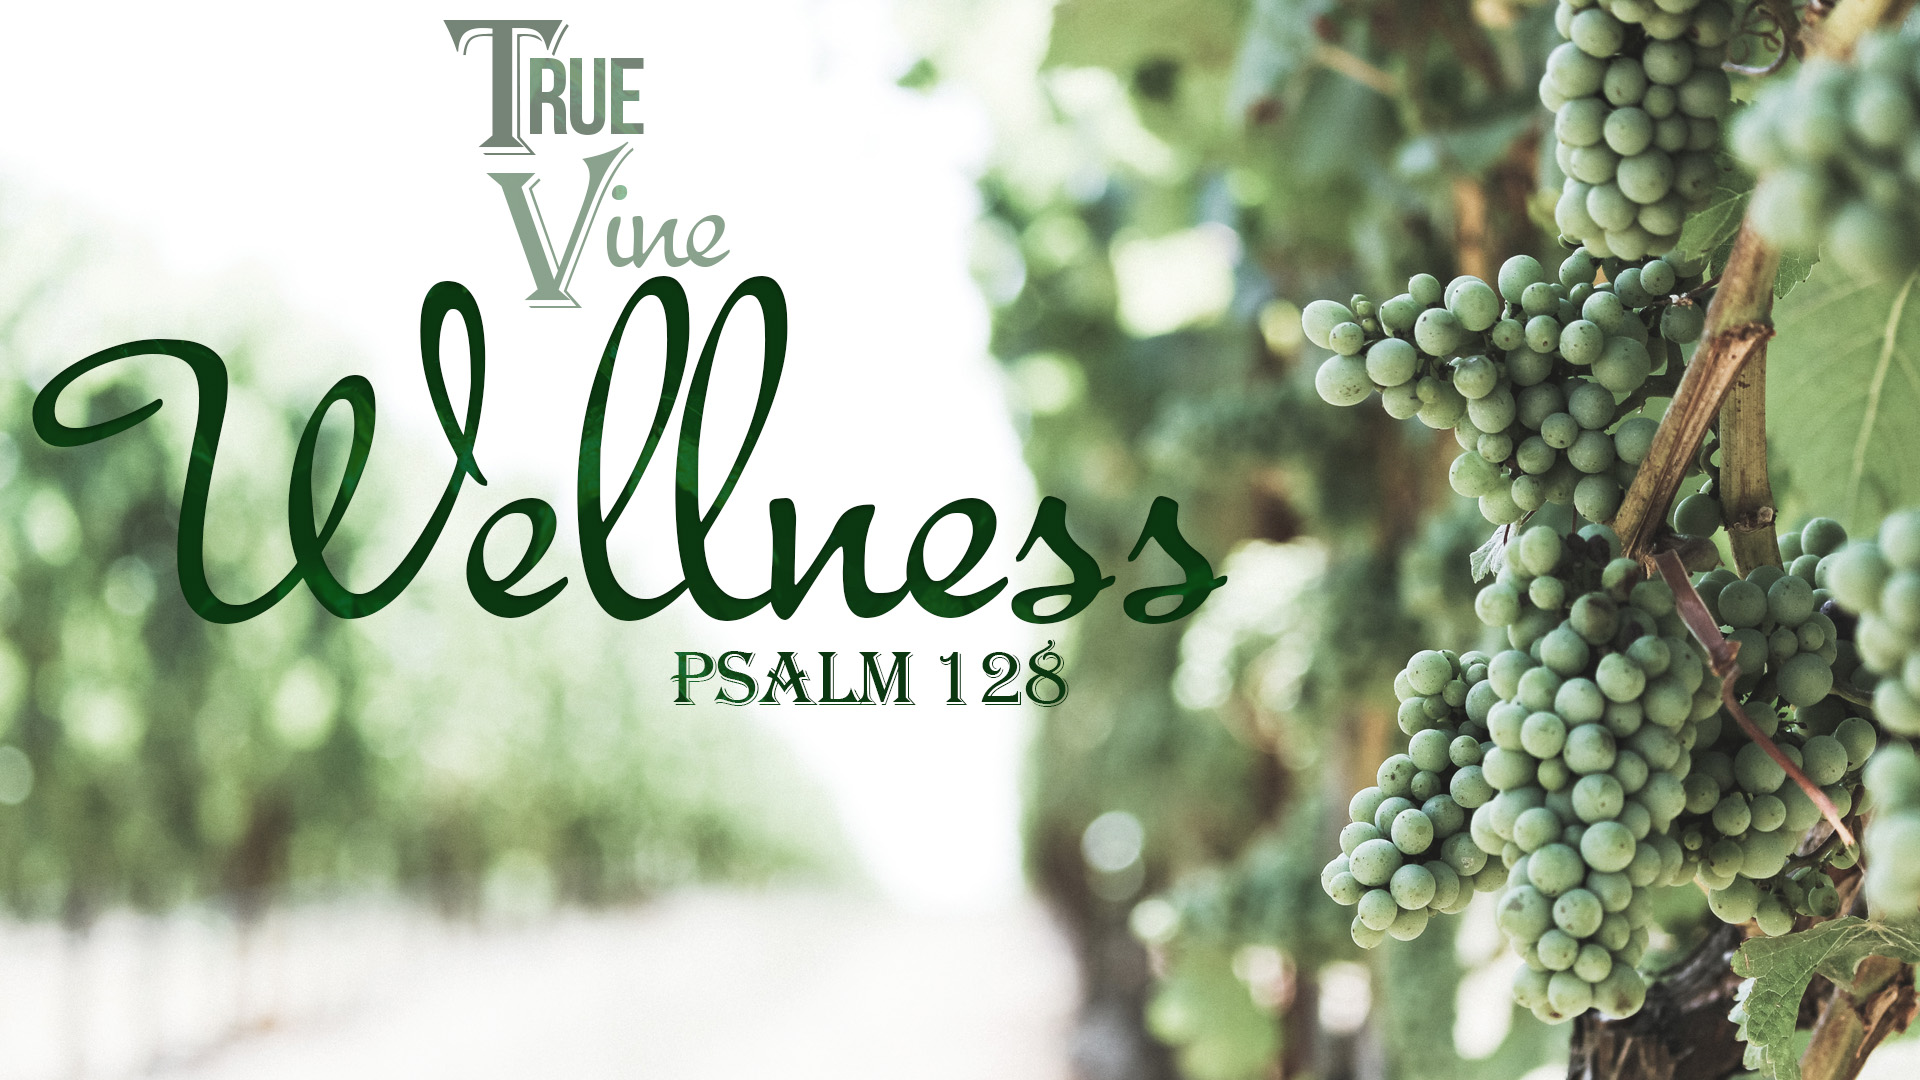 True Vine, part 2: Wellness  Image